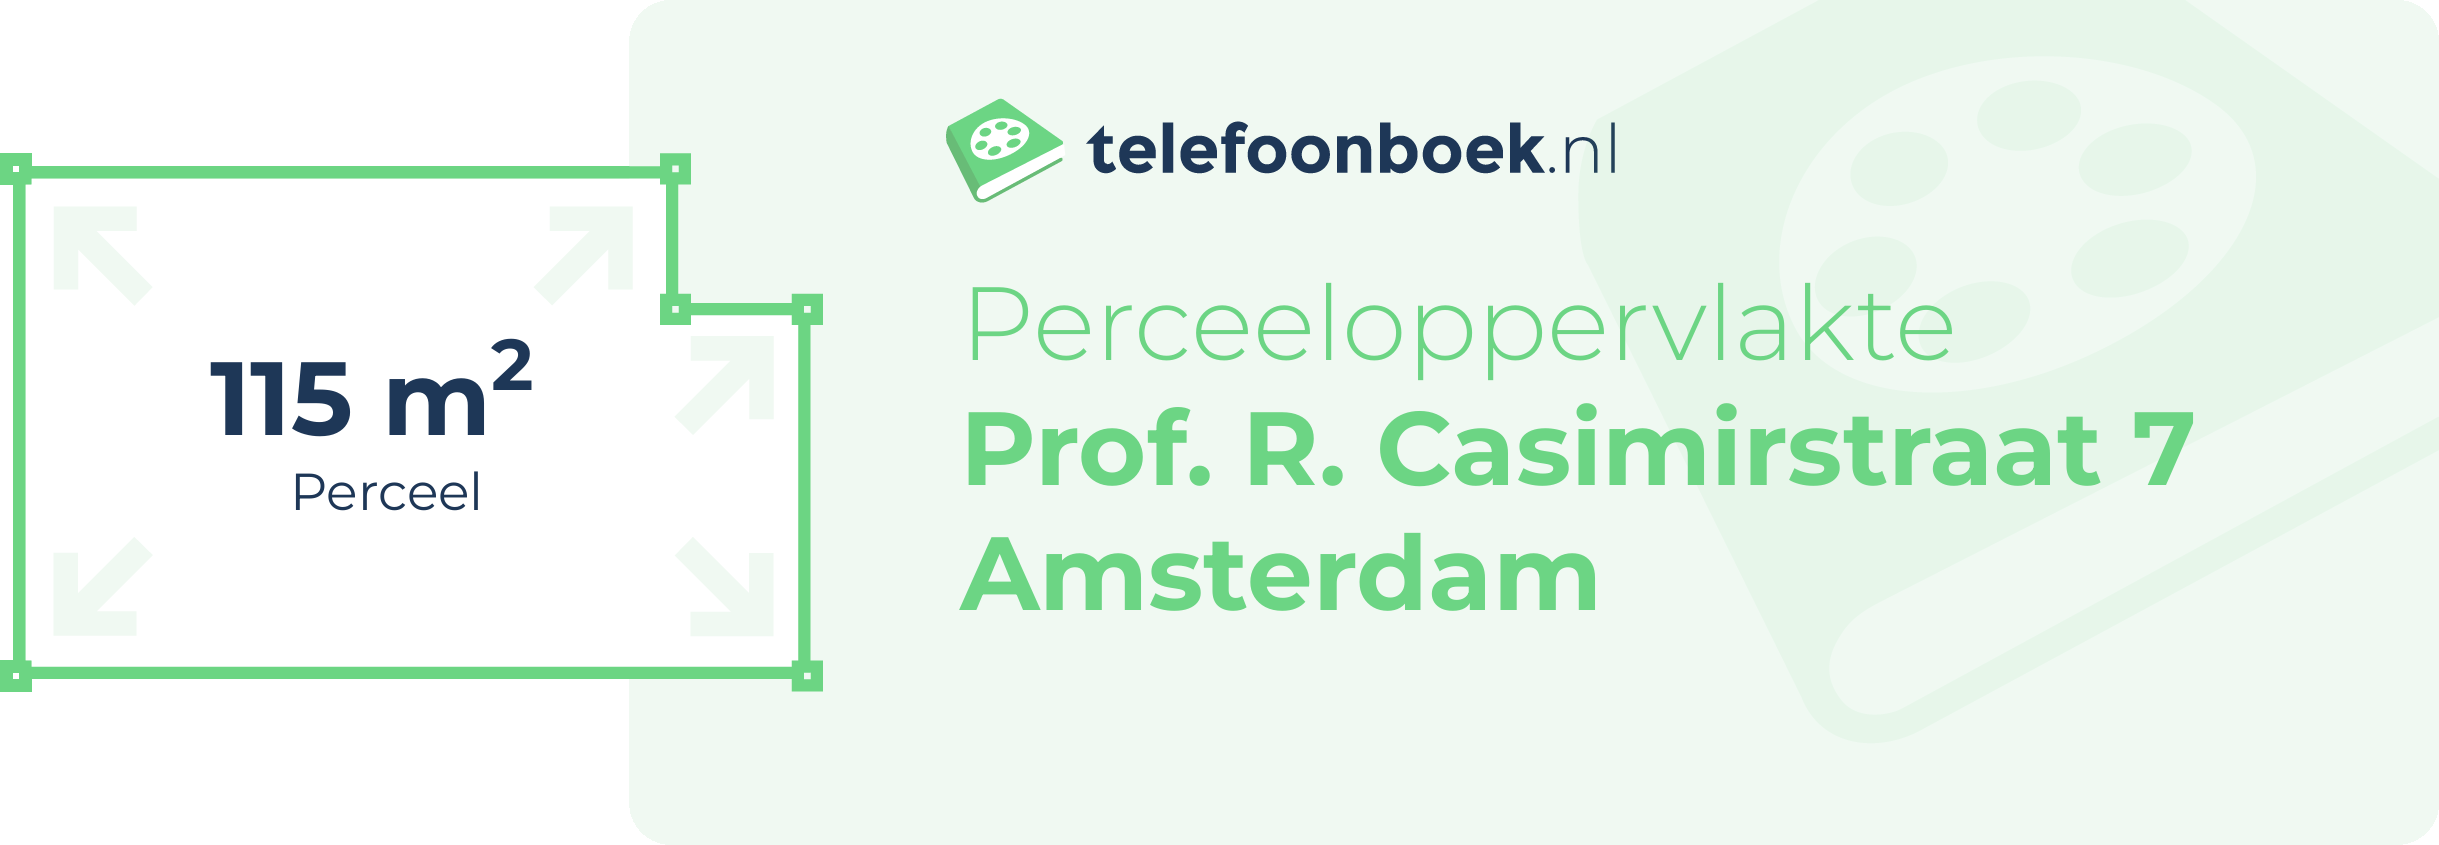 Perceeloppervlakte Prof. R. Casimirstraat 7 Amsterdam